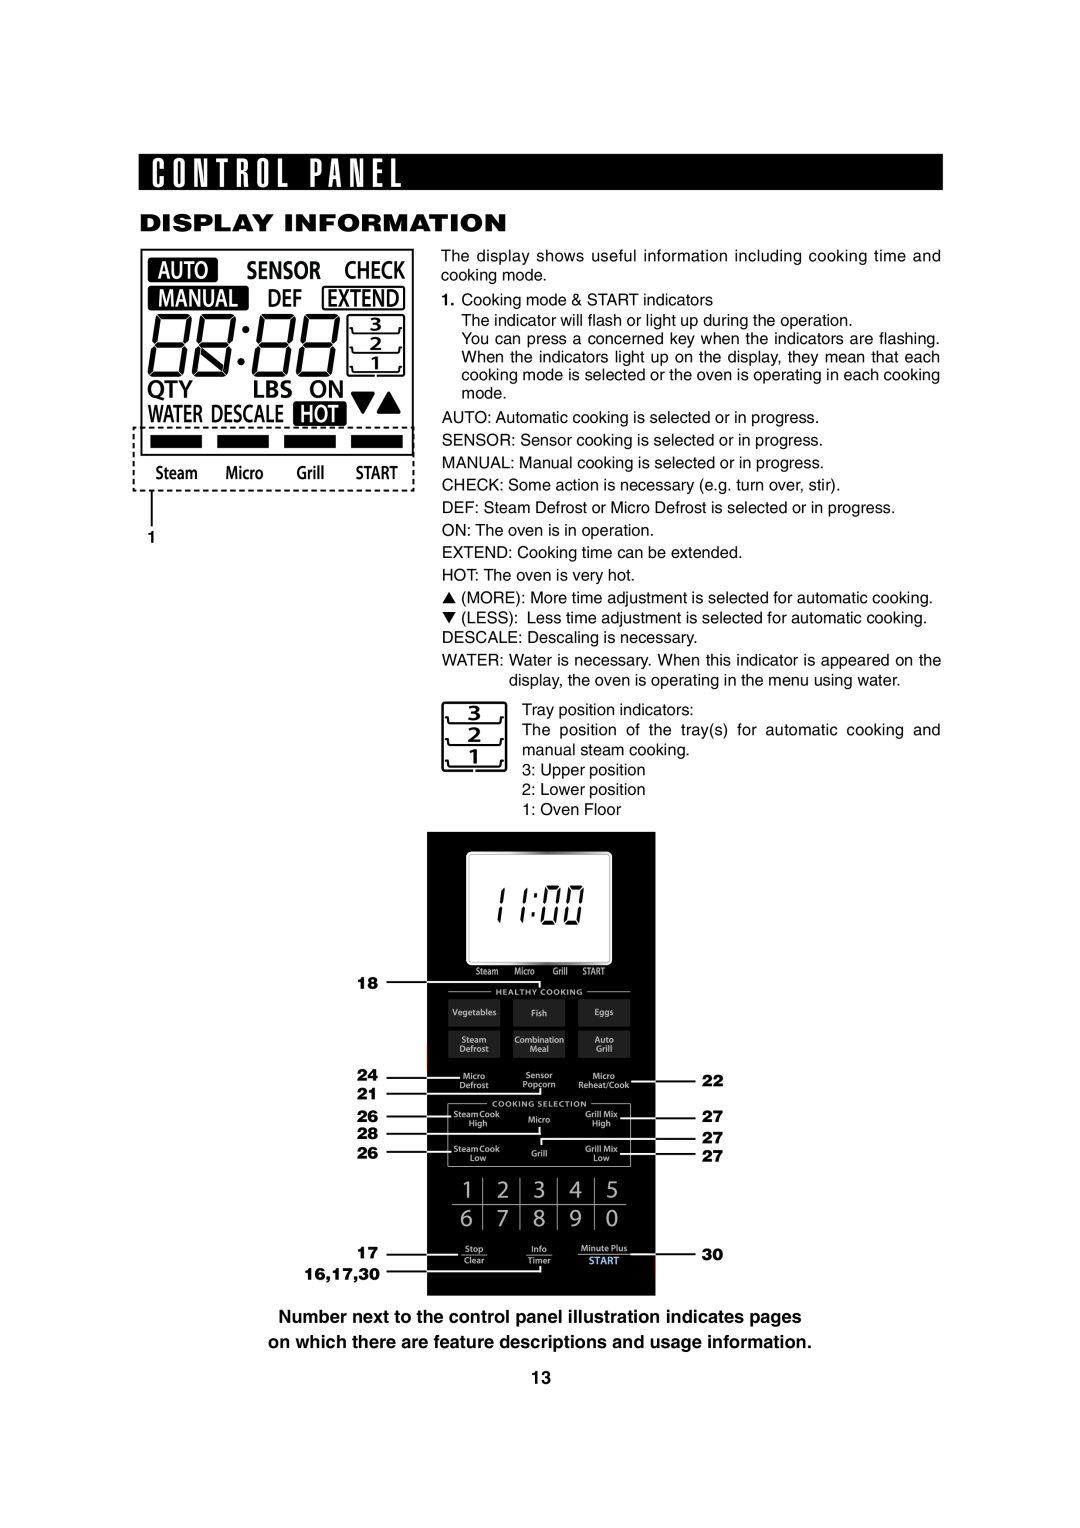 Sharp AX-1100R, AX-1100S operation manual C O N T R O L P A N E L, Display Information, 16,17,30 